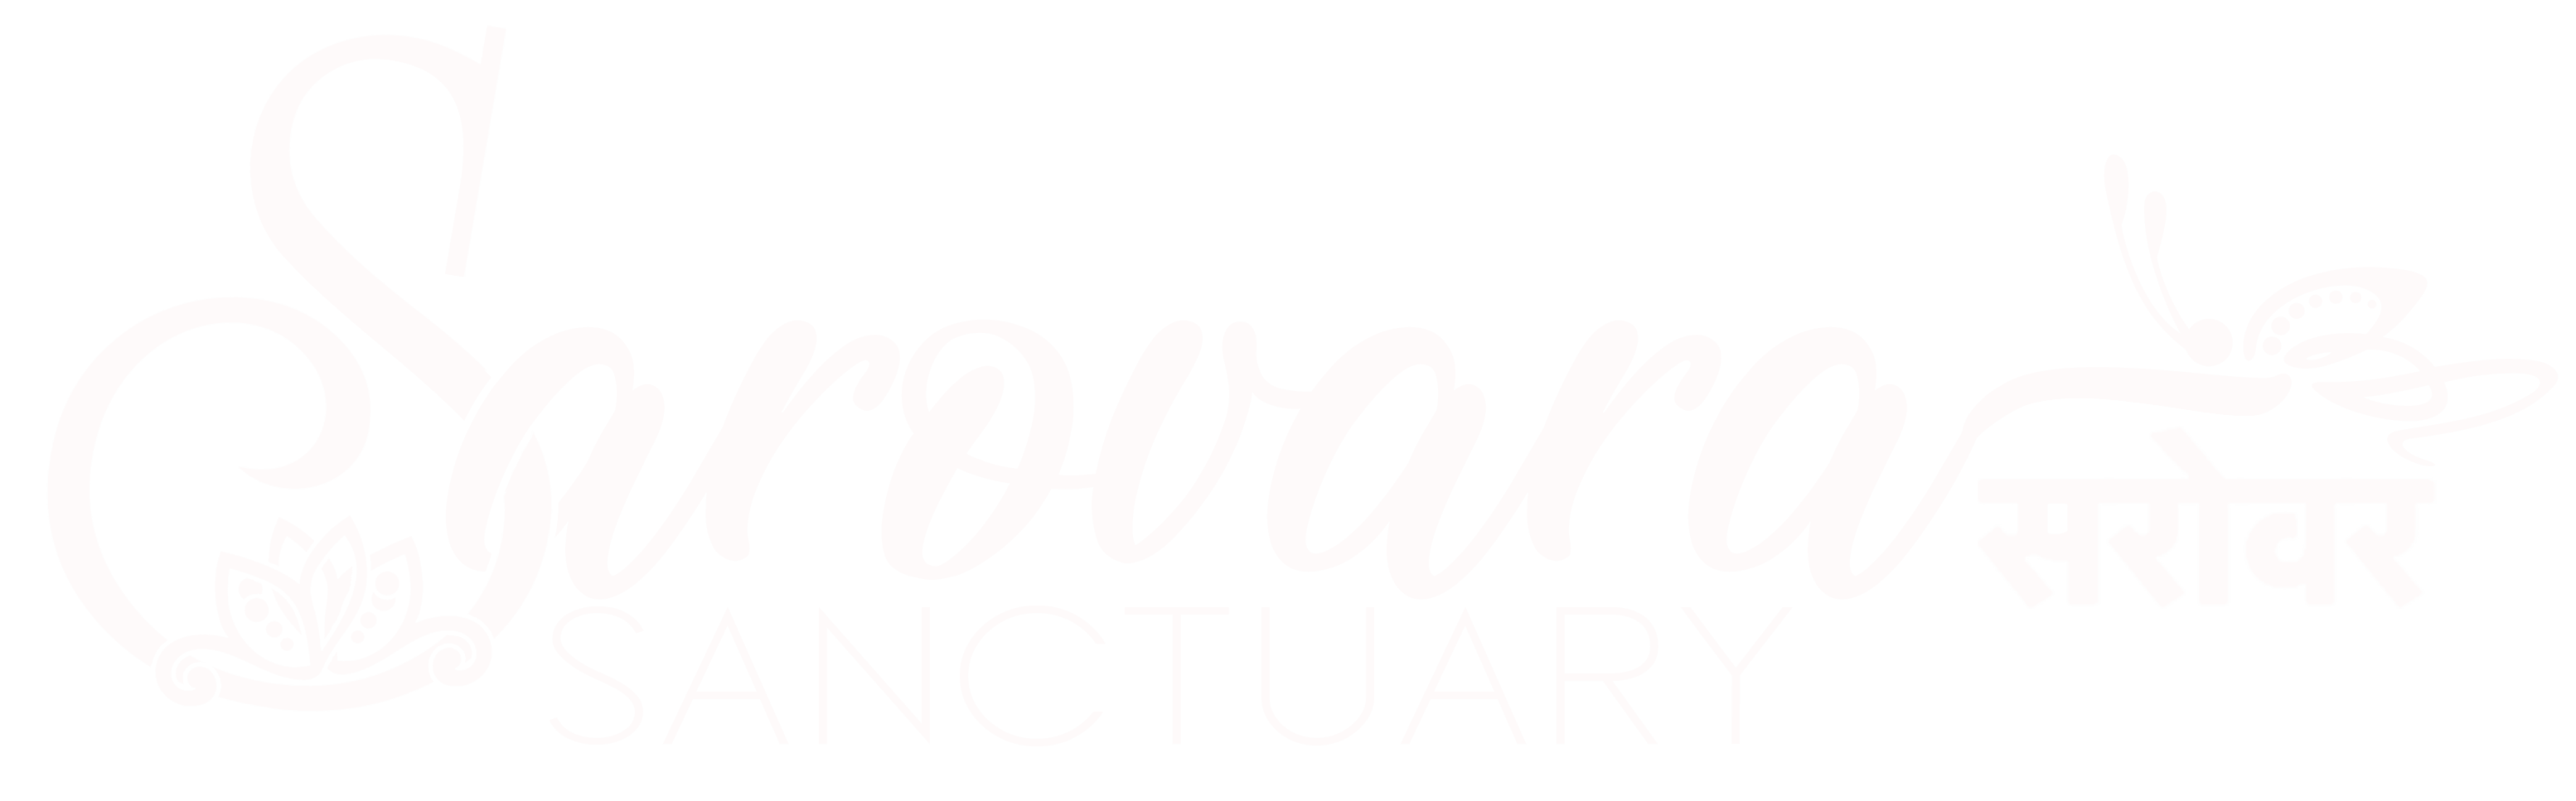 Sarovara. Sanctuary logo 